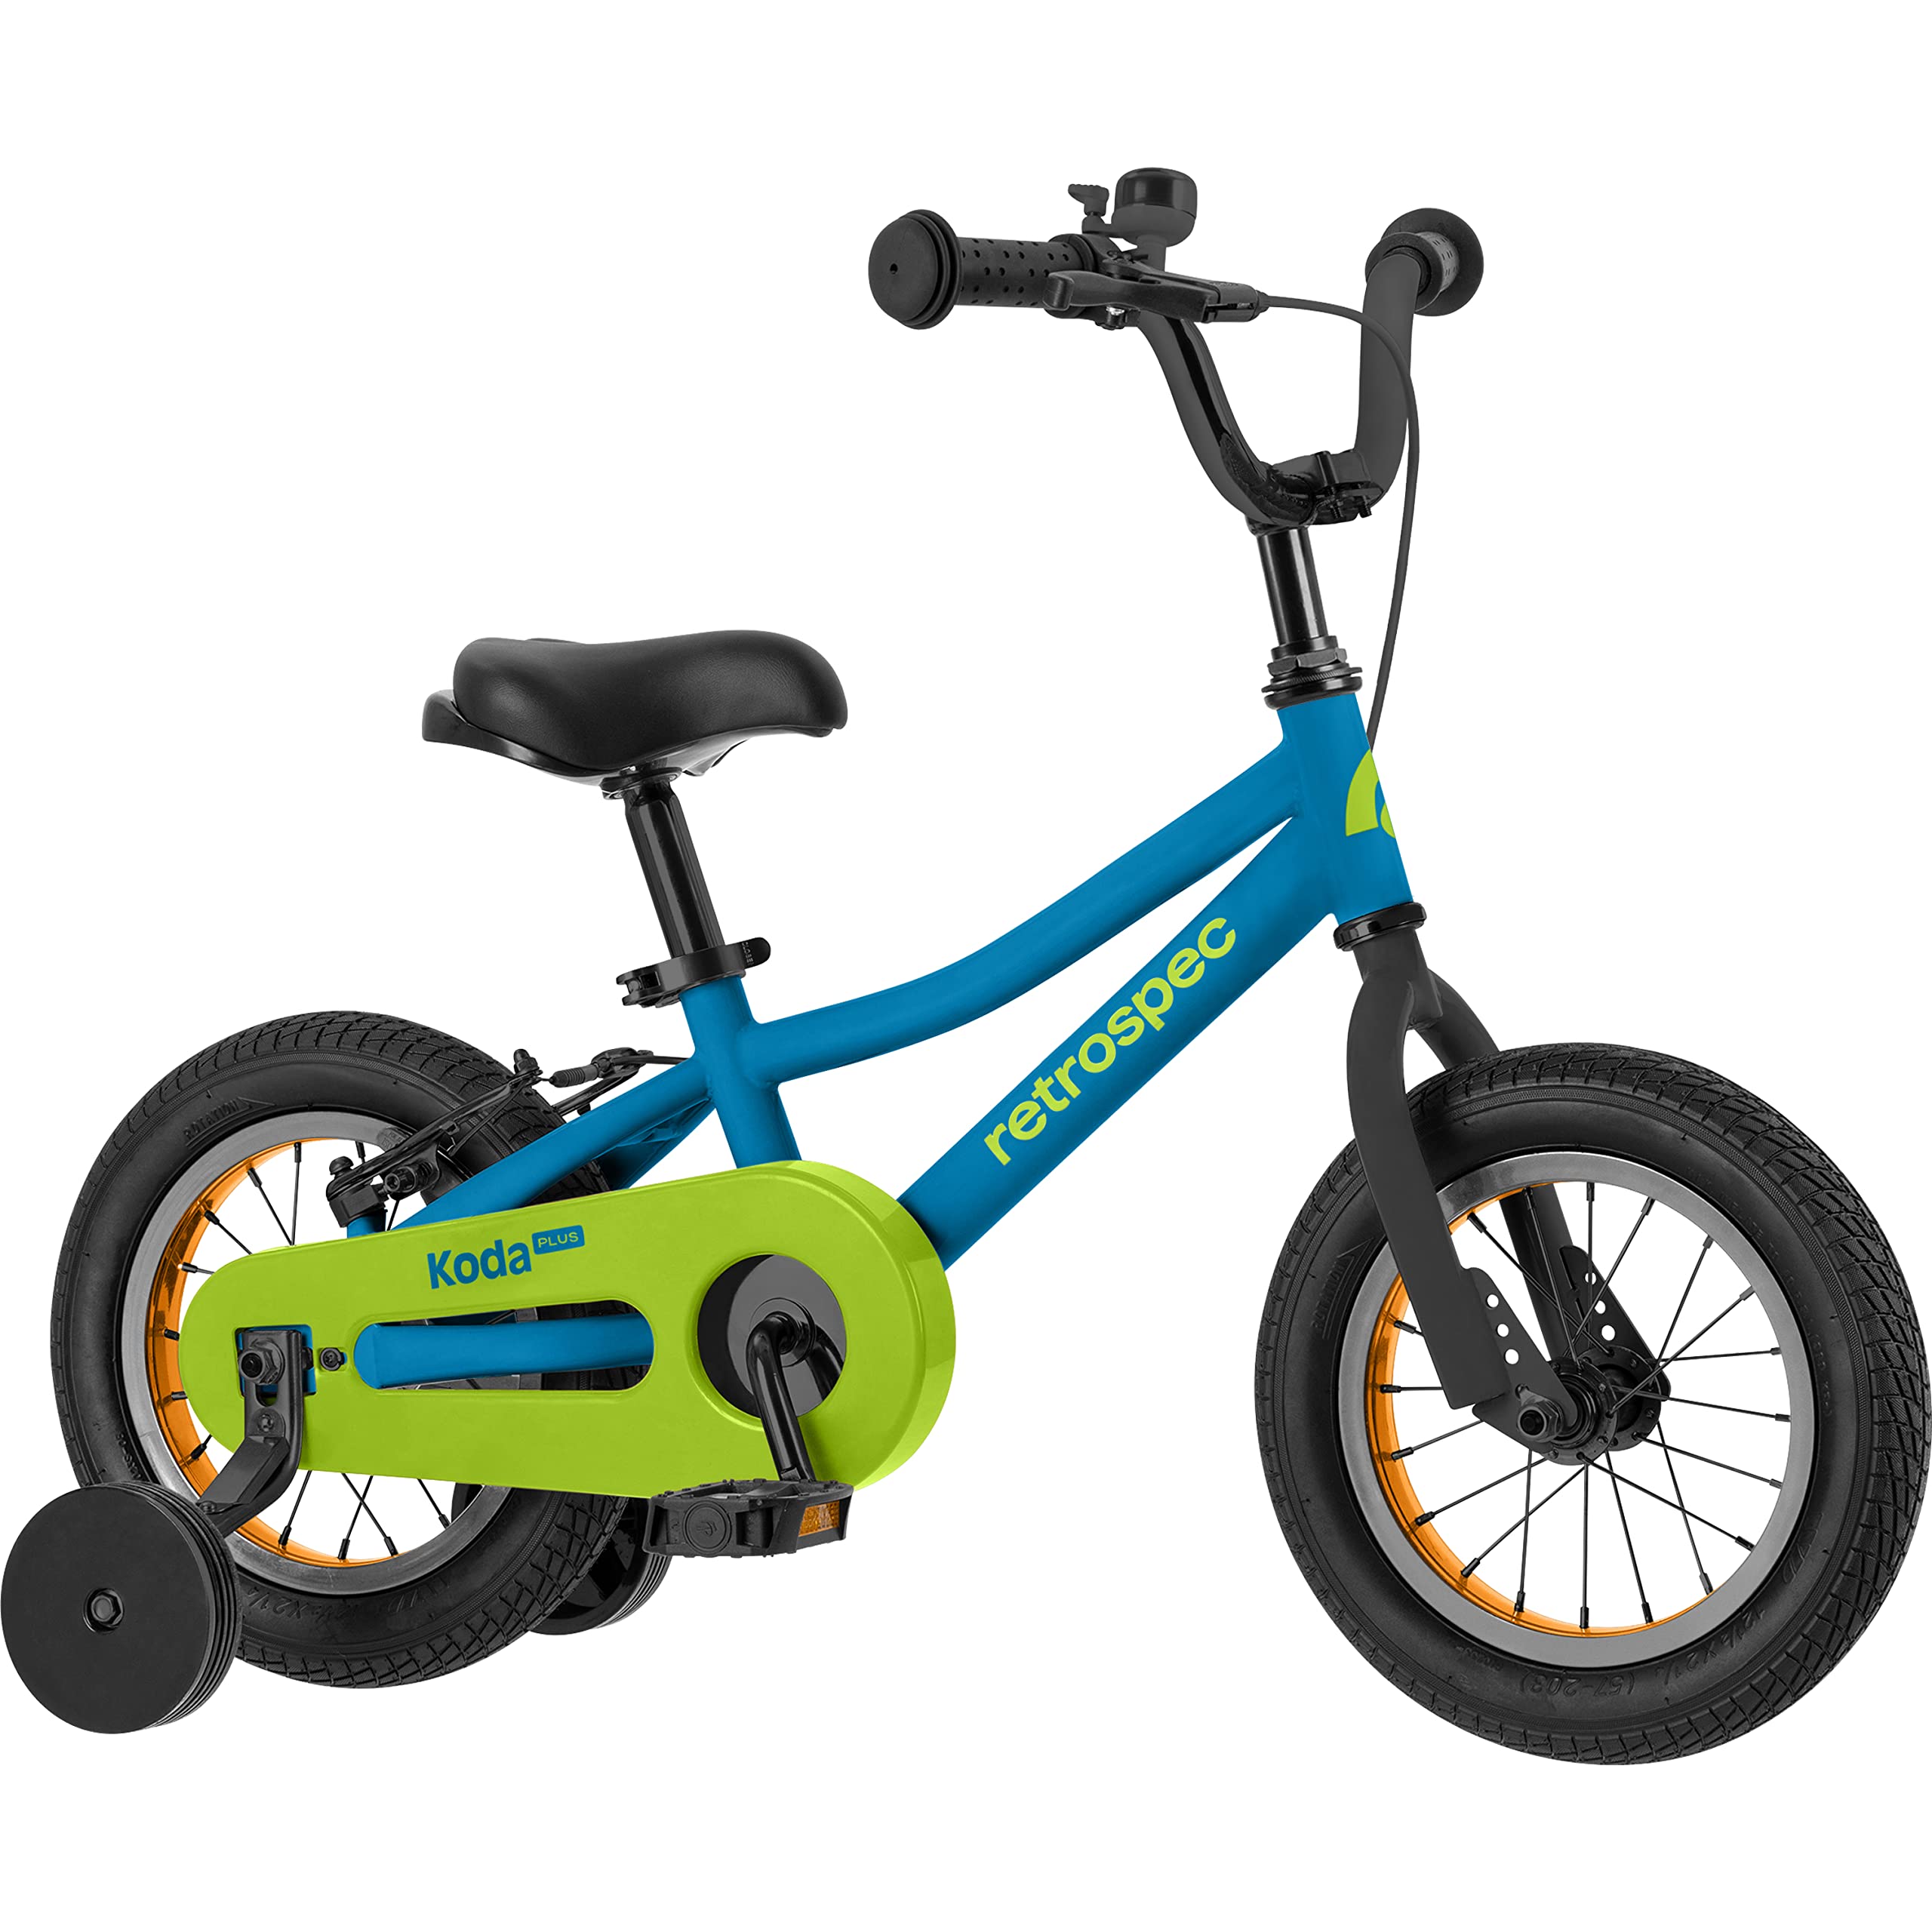 Retrospec Koda Plus Kids Bike for Boys & Girls Ages 2-3 Years - 12